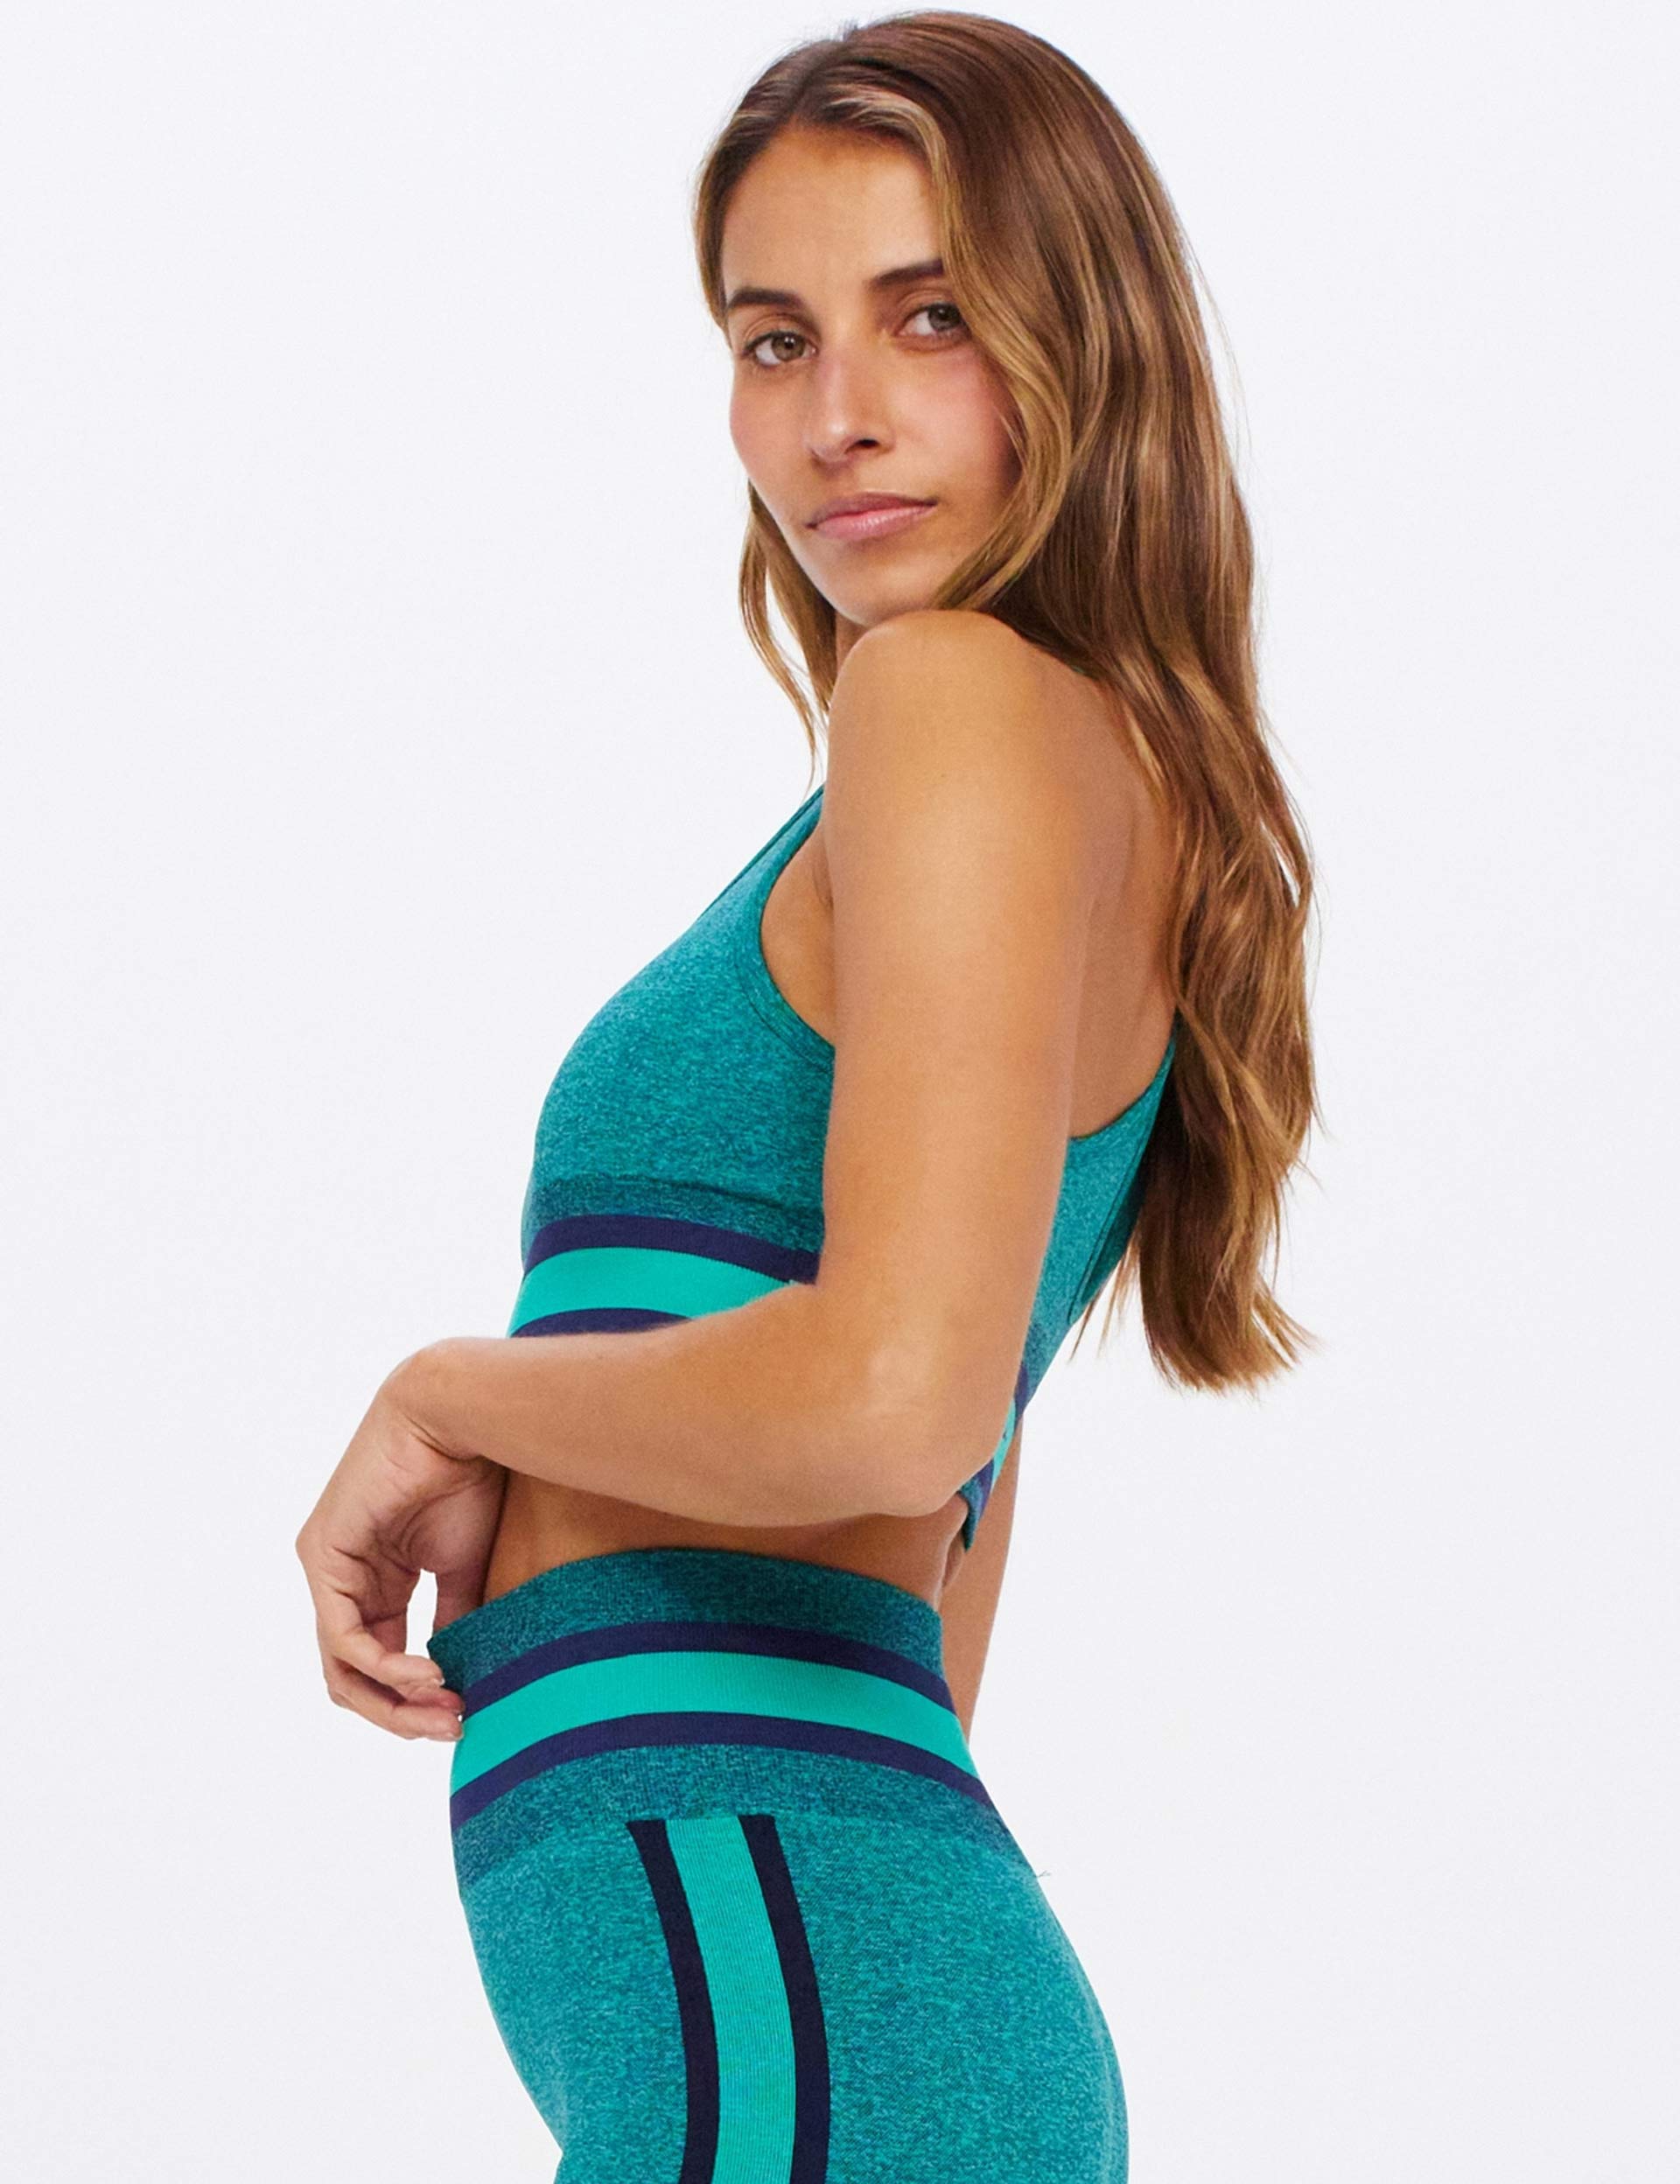 Gymshark sports bra size xsmall - $30 - From Sandys